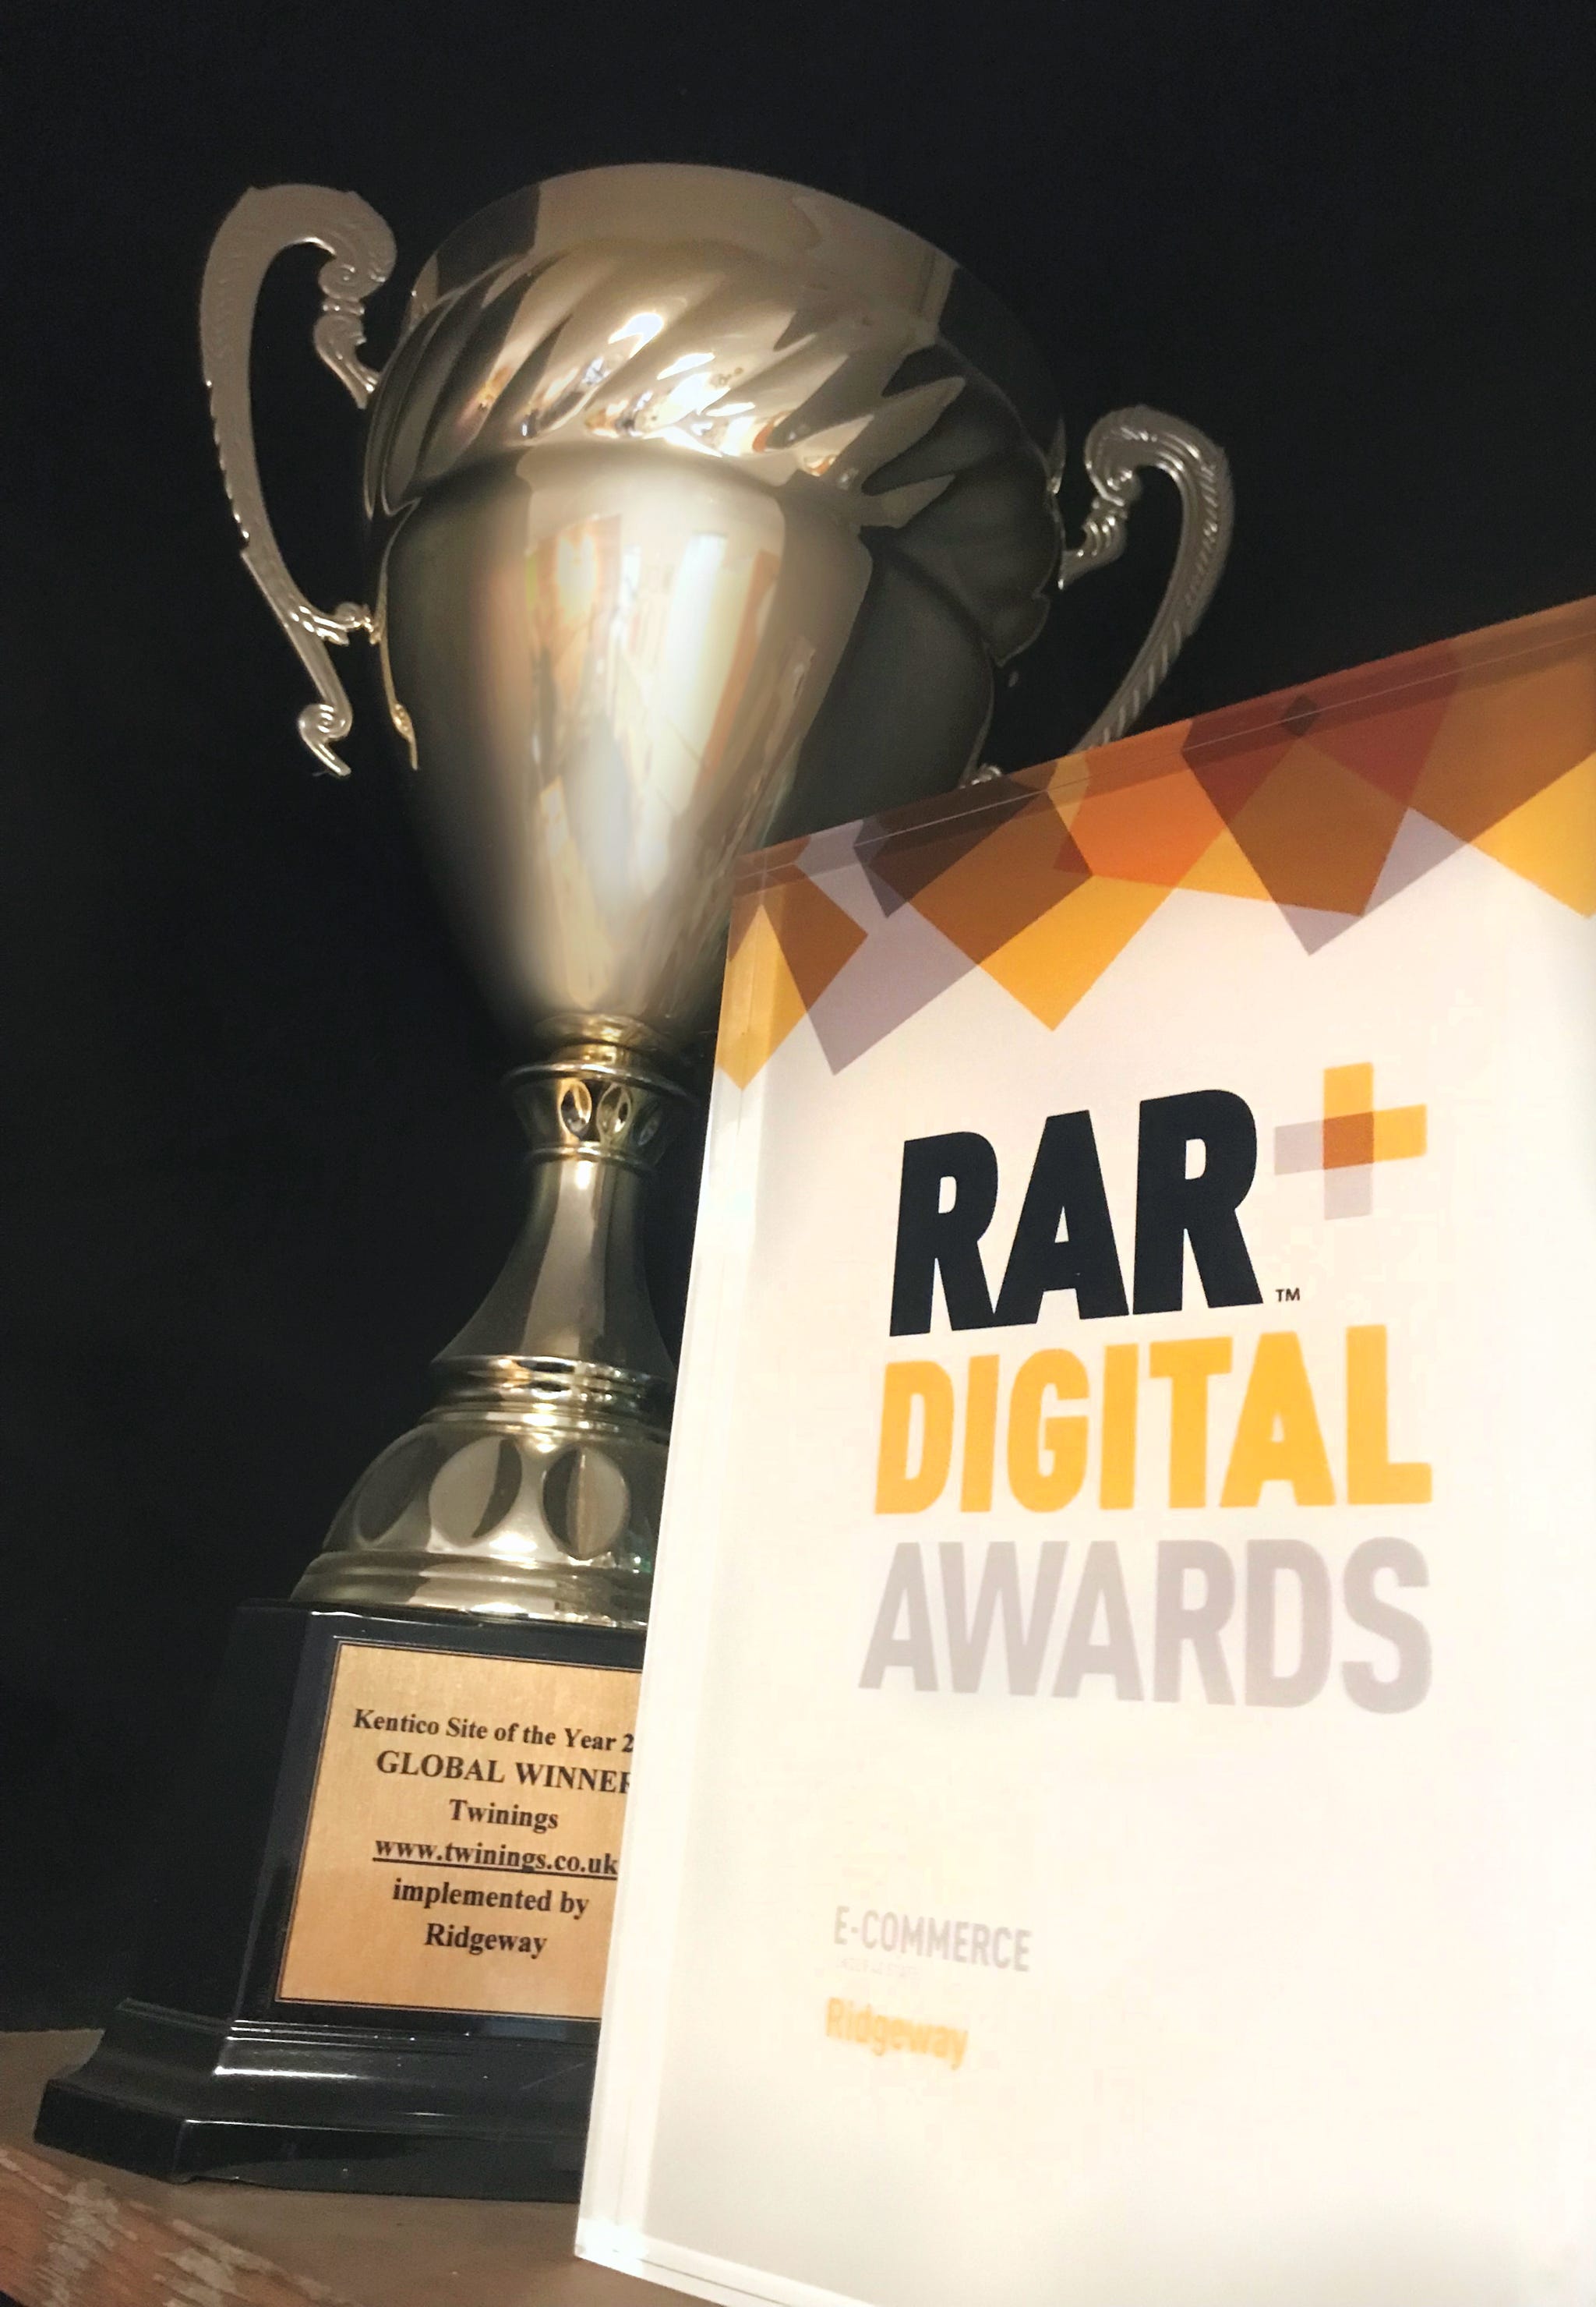 Kentico Global Winner and RAR Digital awards trophies 